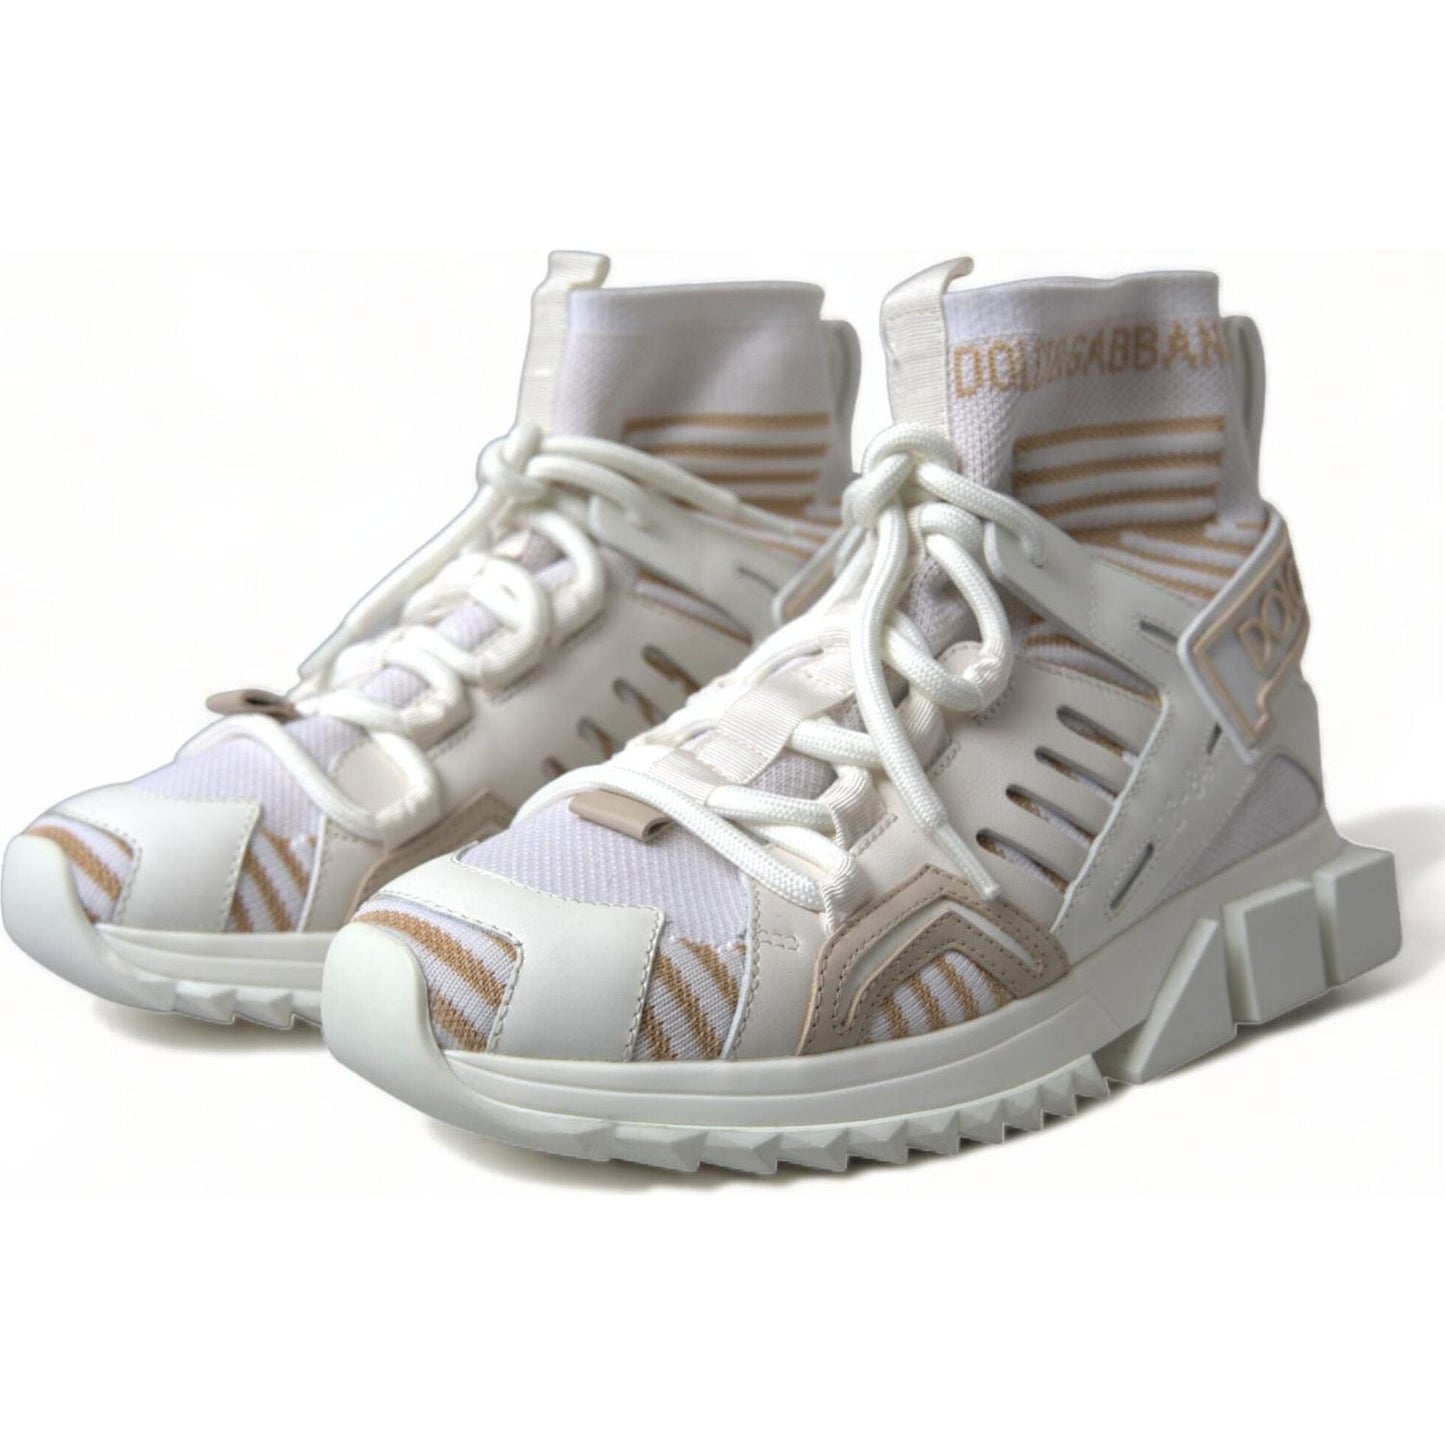 Dolce & Gabbana Elegant Sorrento Slip-On Sneakers white-beige-sorrento-socks-sneakers-shoes 465A2043-BG-scaled-a70cedbf-1cc.jpg